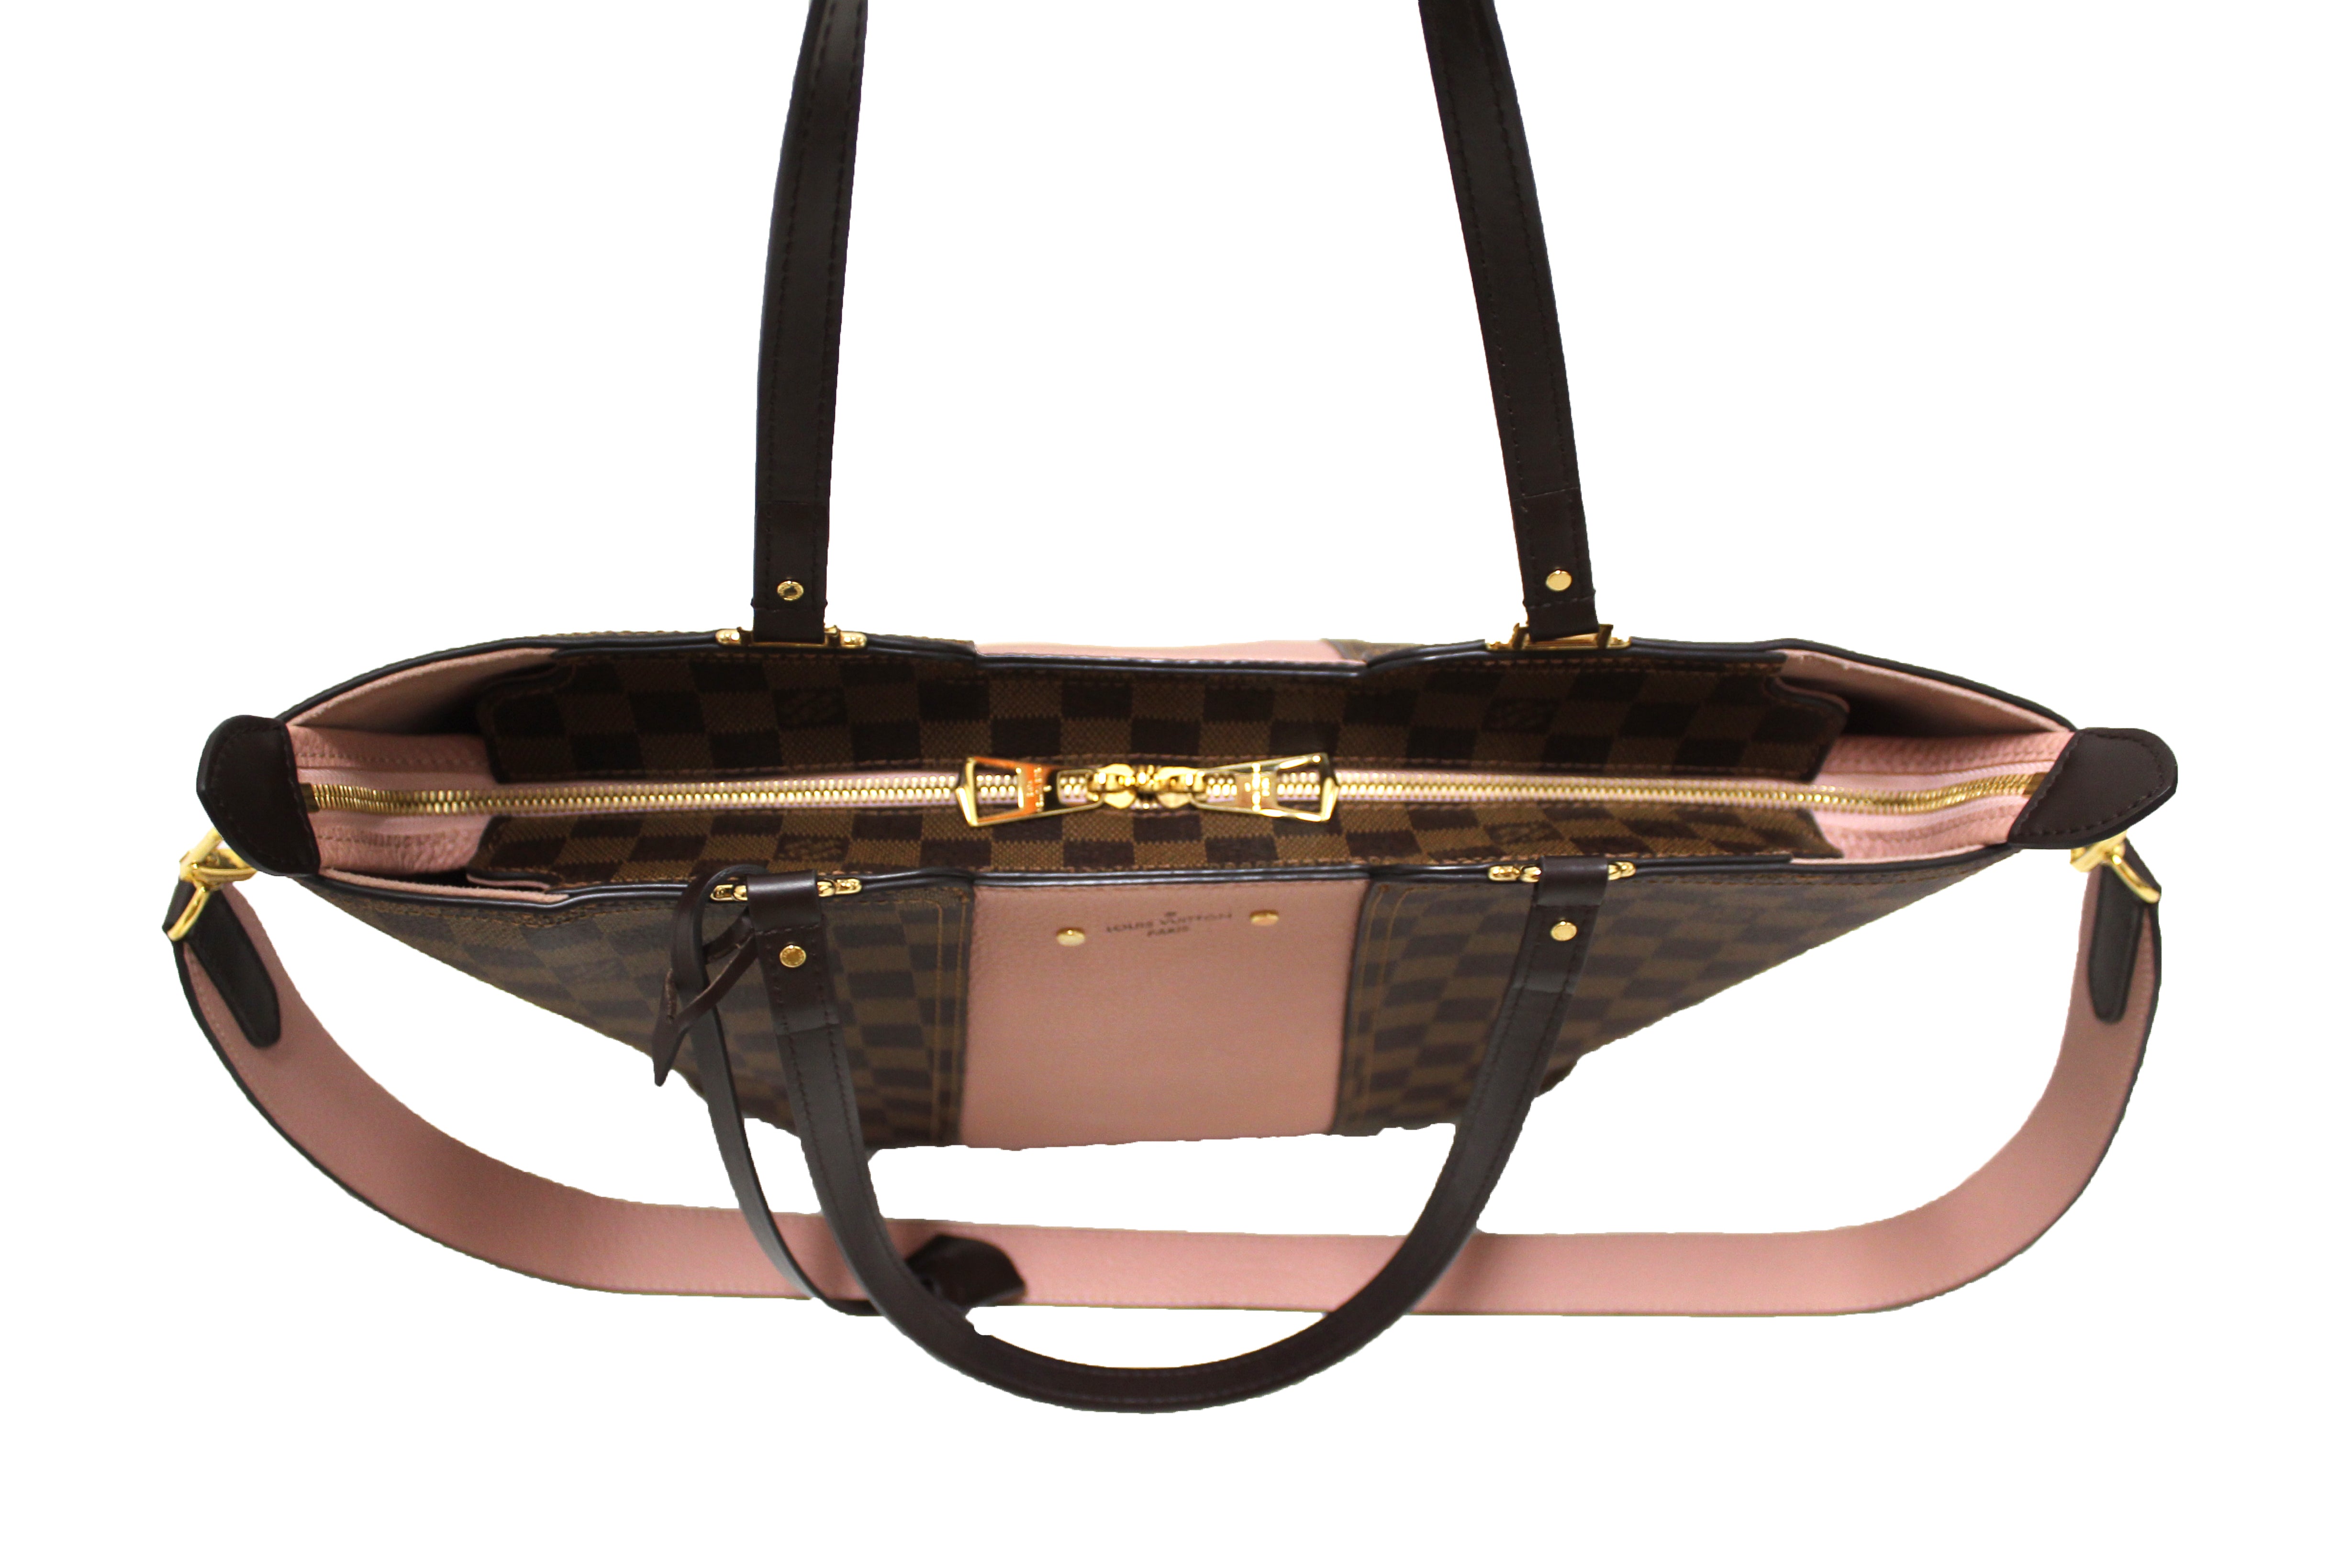 Authentic Louis Vuitton Damier Ebene with Pink Leather Jersey Tote Bag –  Paris Station Shop